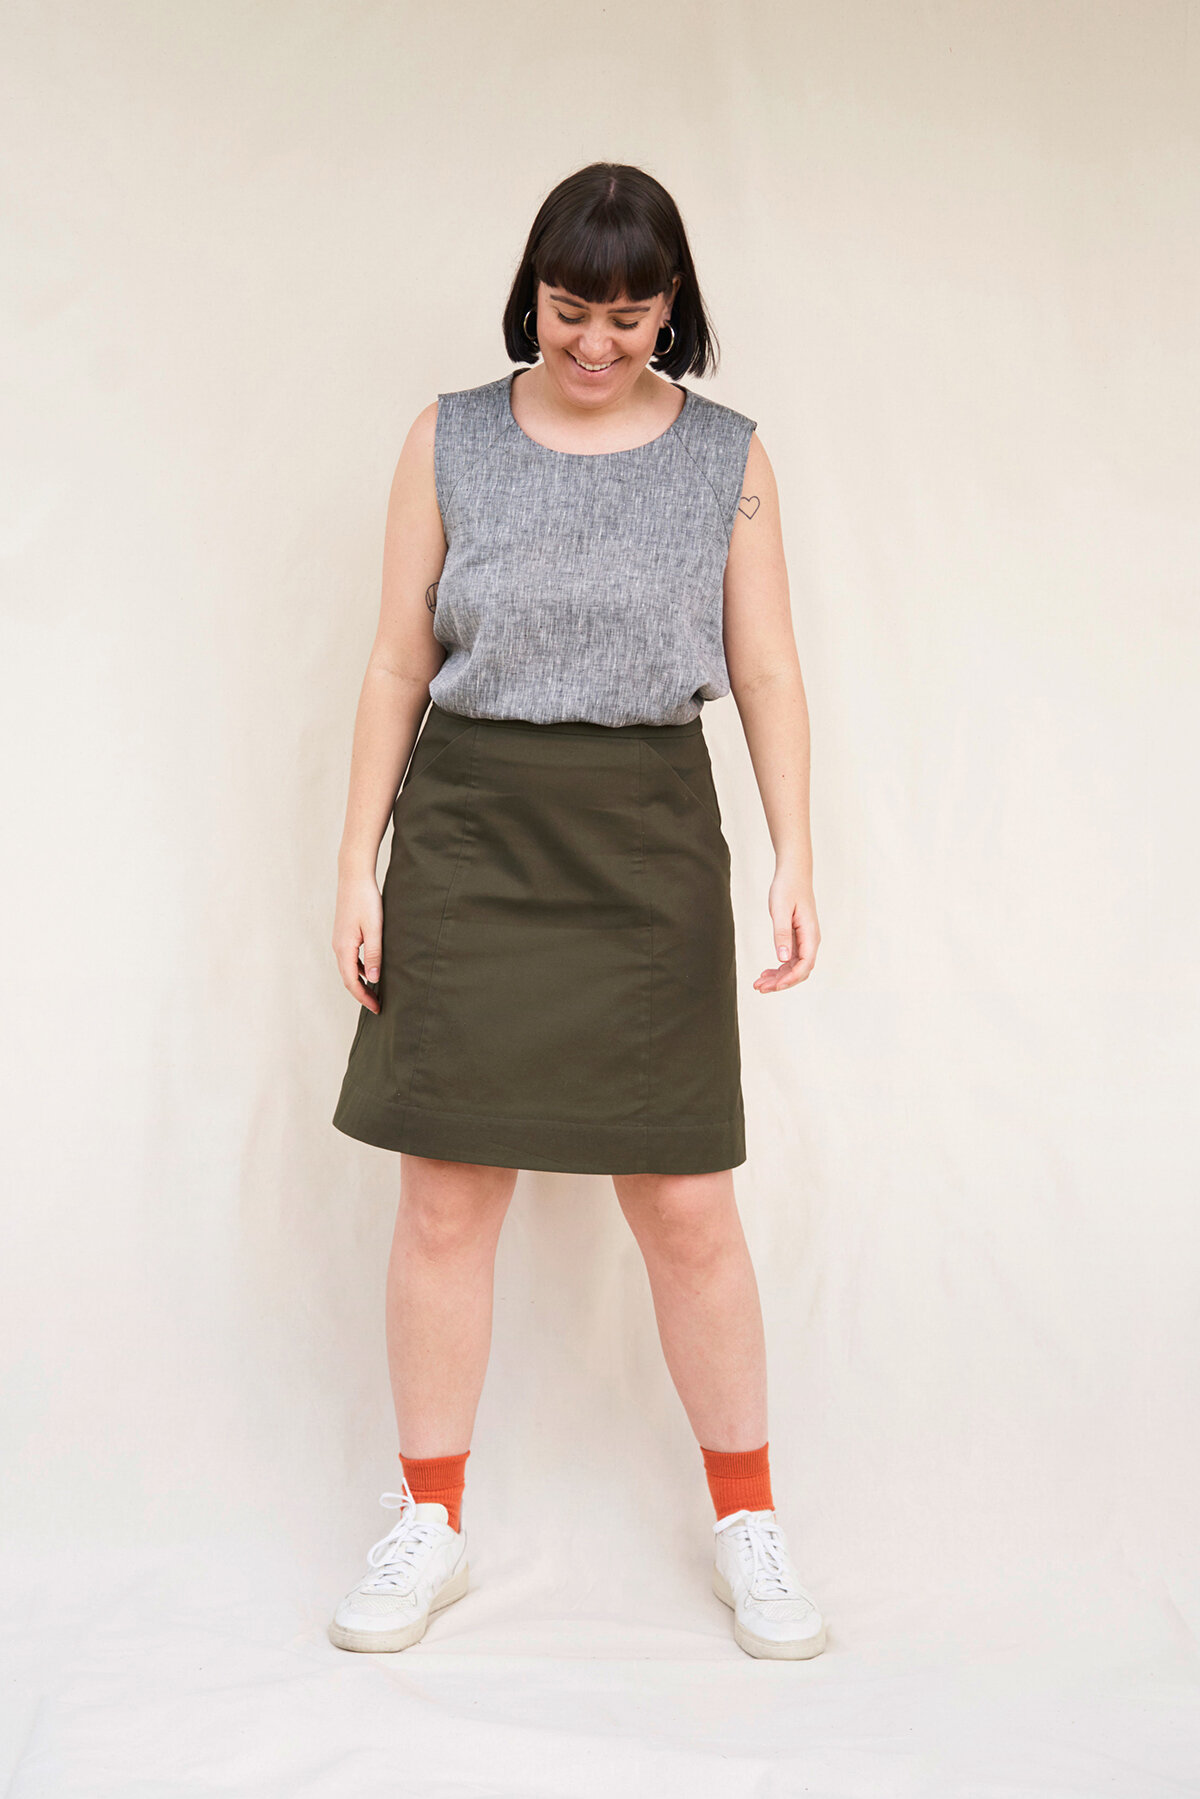 Barkly skirt sewing pattern